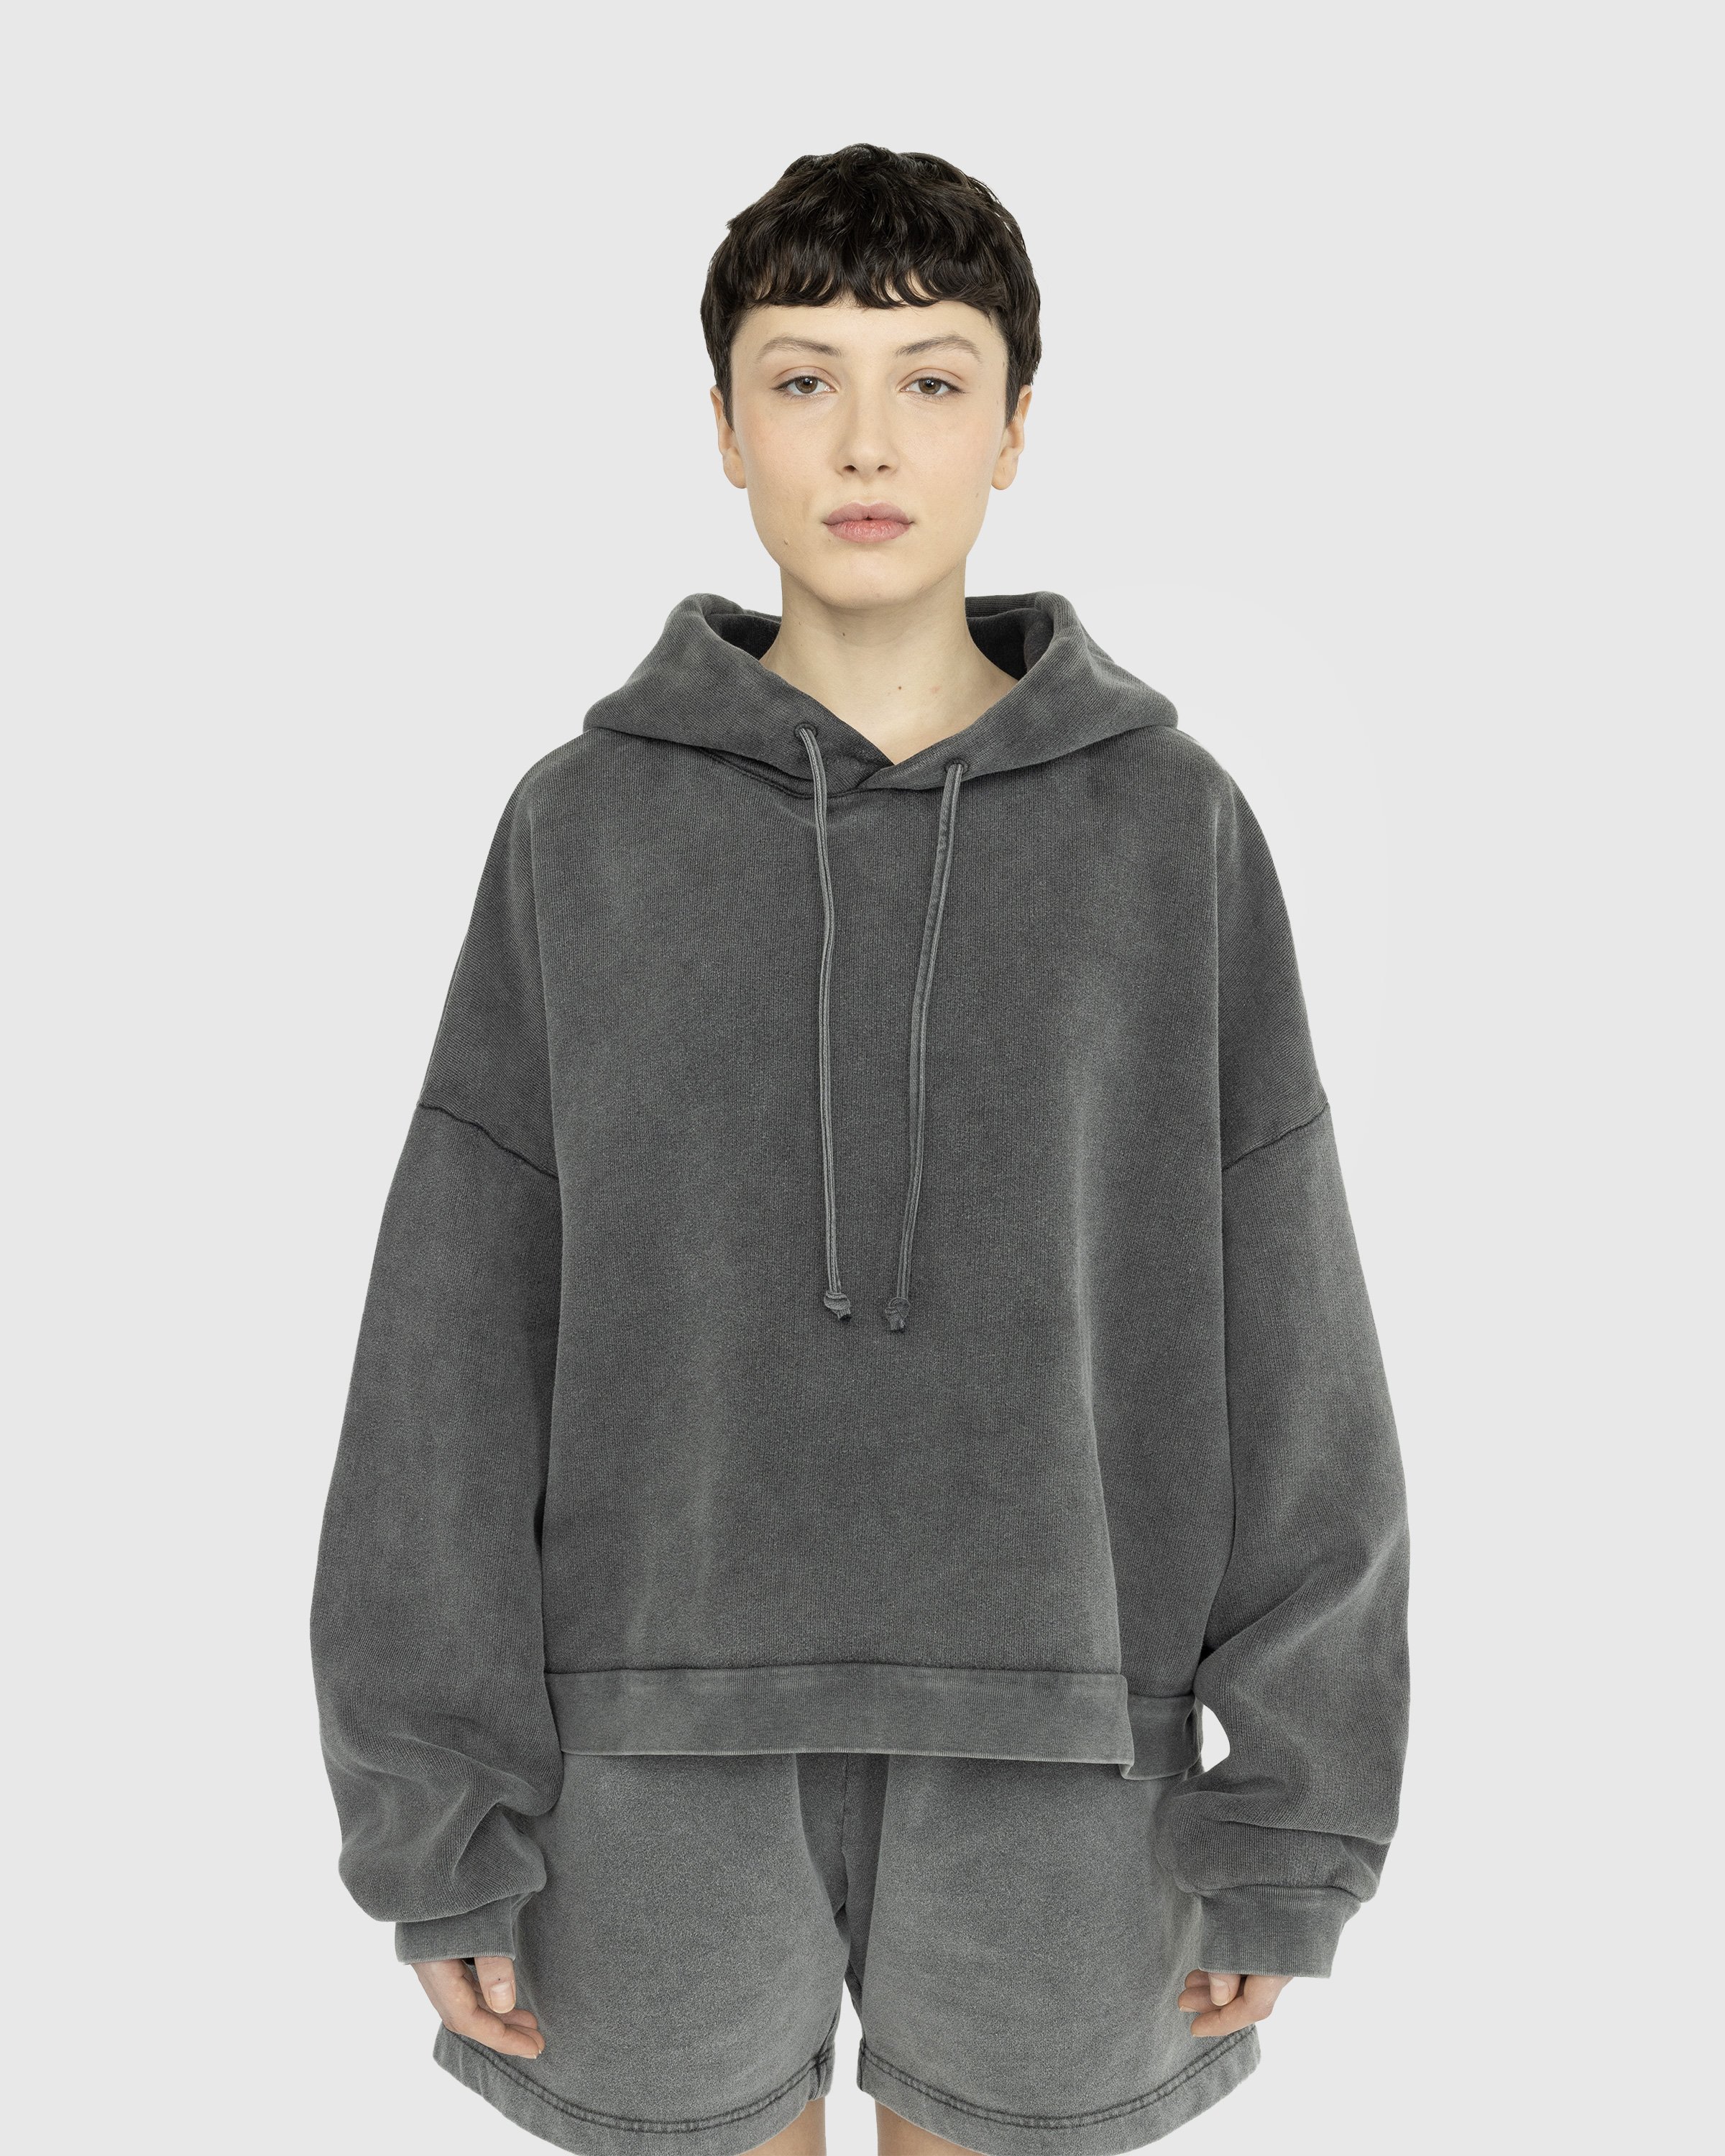 Acne Studios - Hooded Sweatshirt Faded Black - Clothing - Grey - Image 2